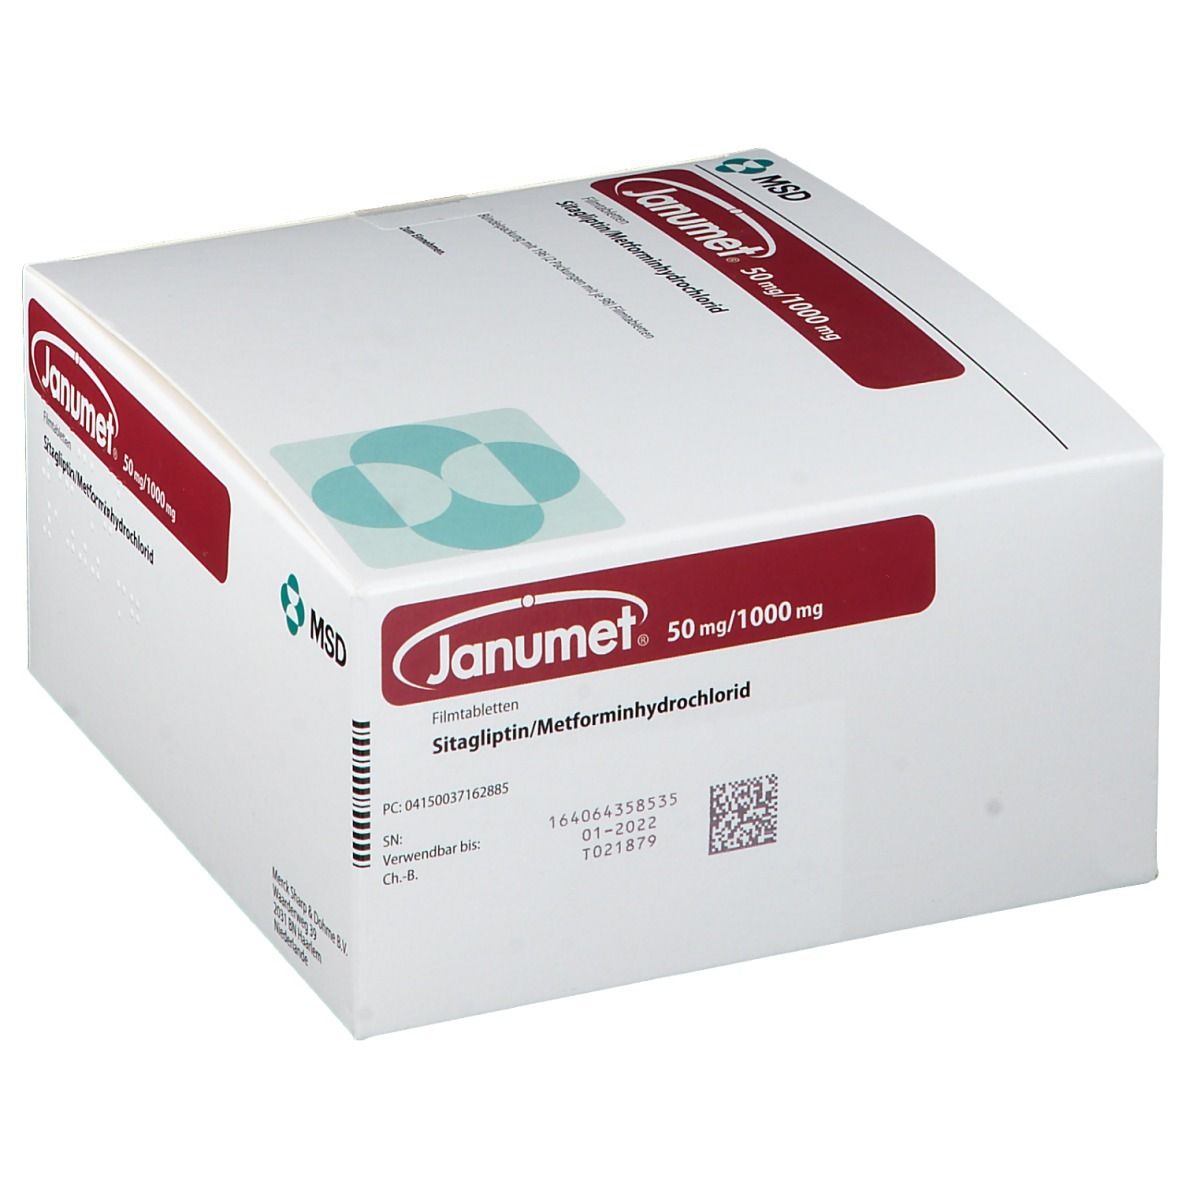 Janumet® 50 mg/1000 mg